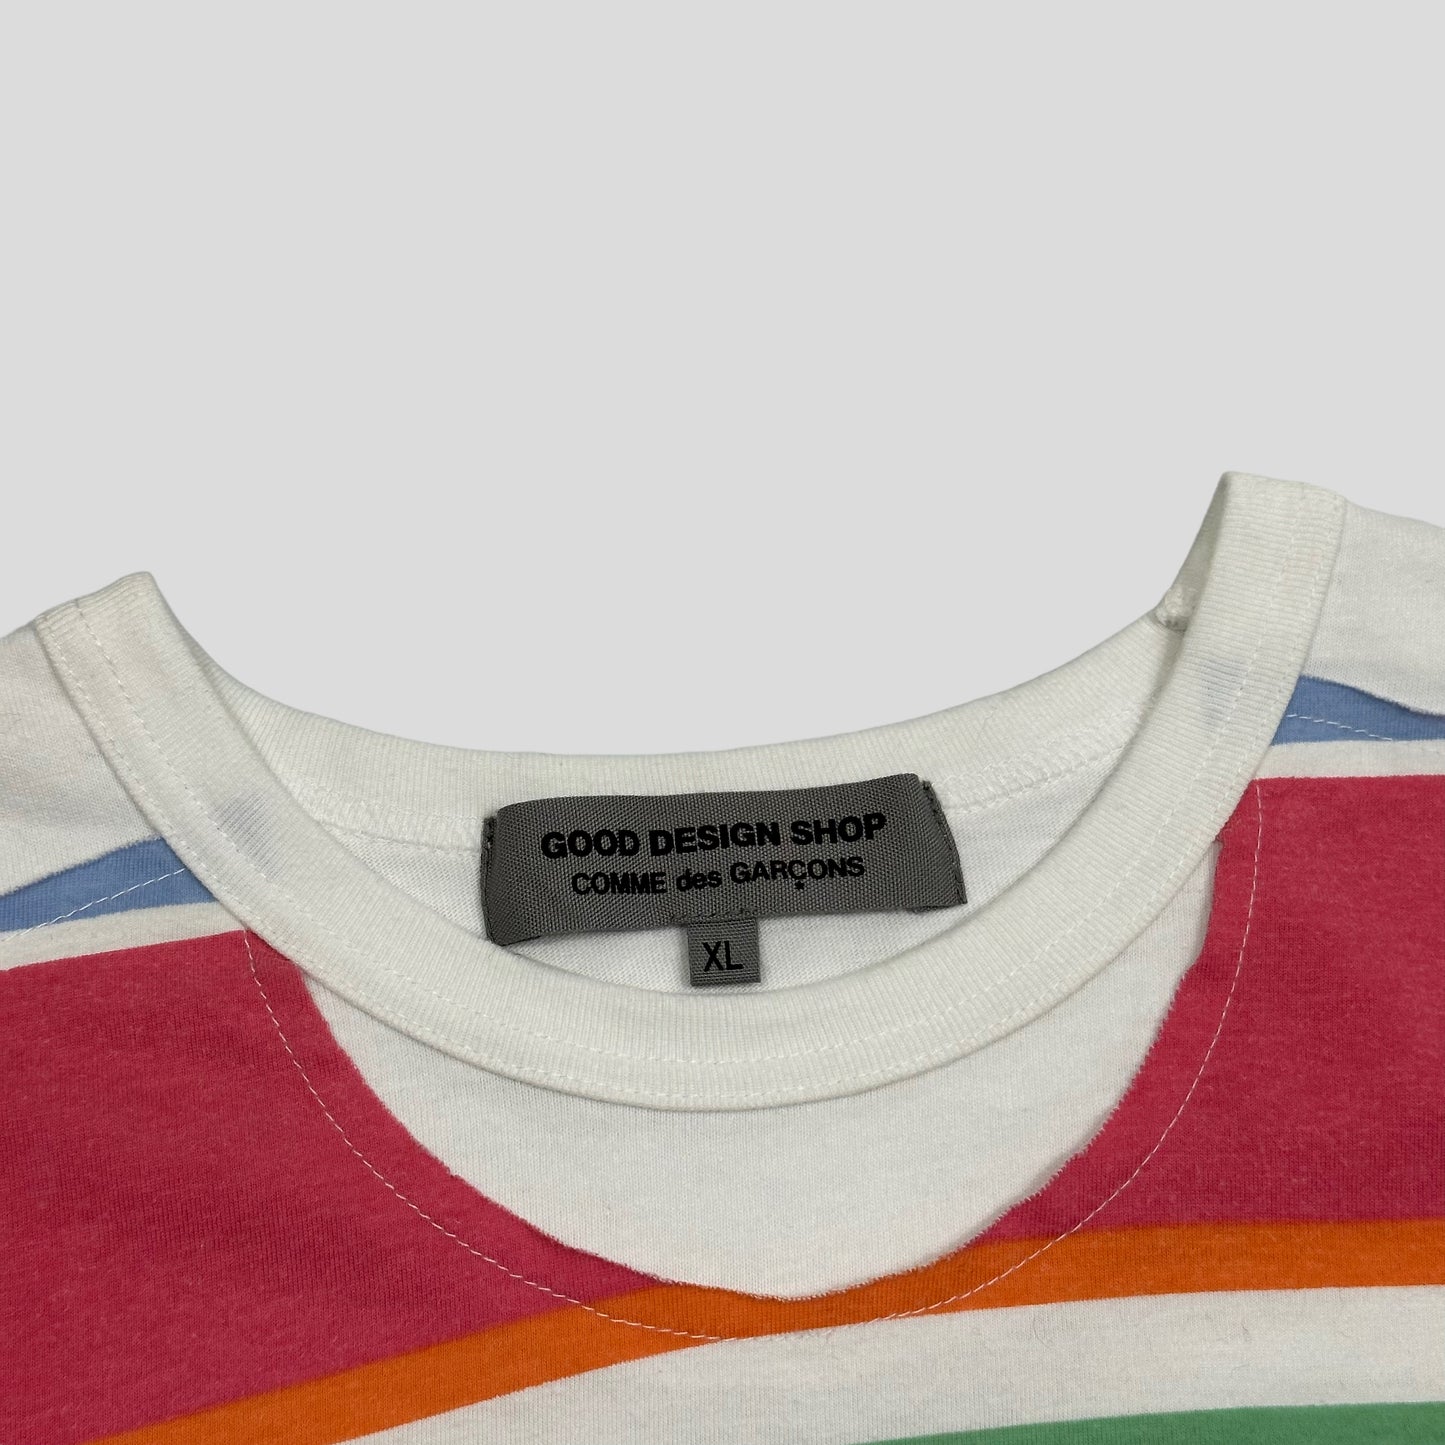 CDG 2015 Stripe Appliqué T-shirt - XL